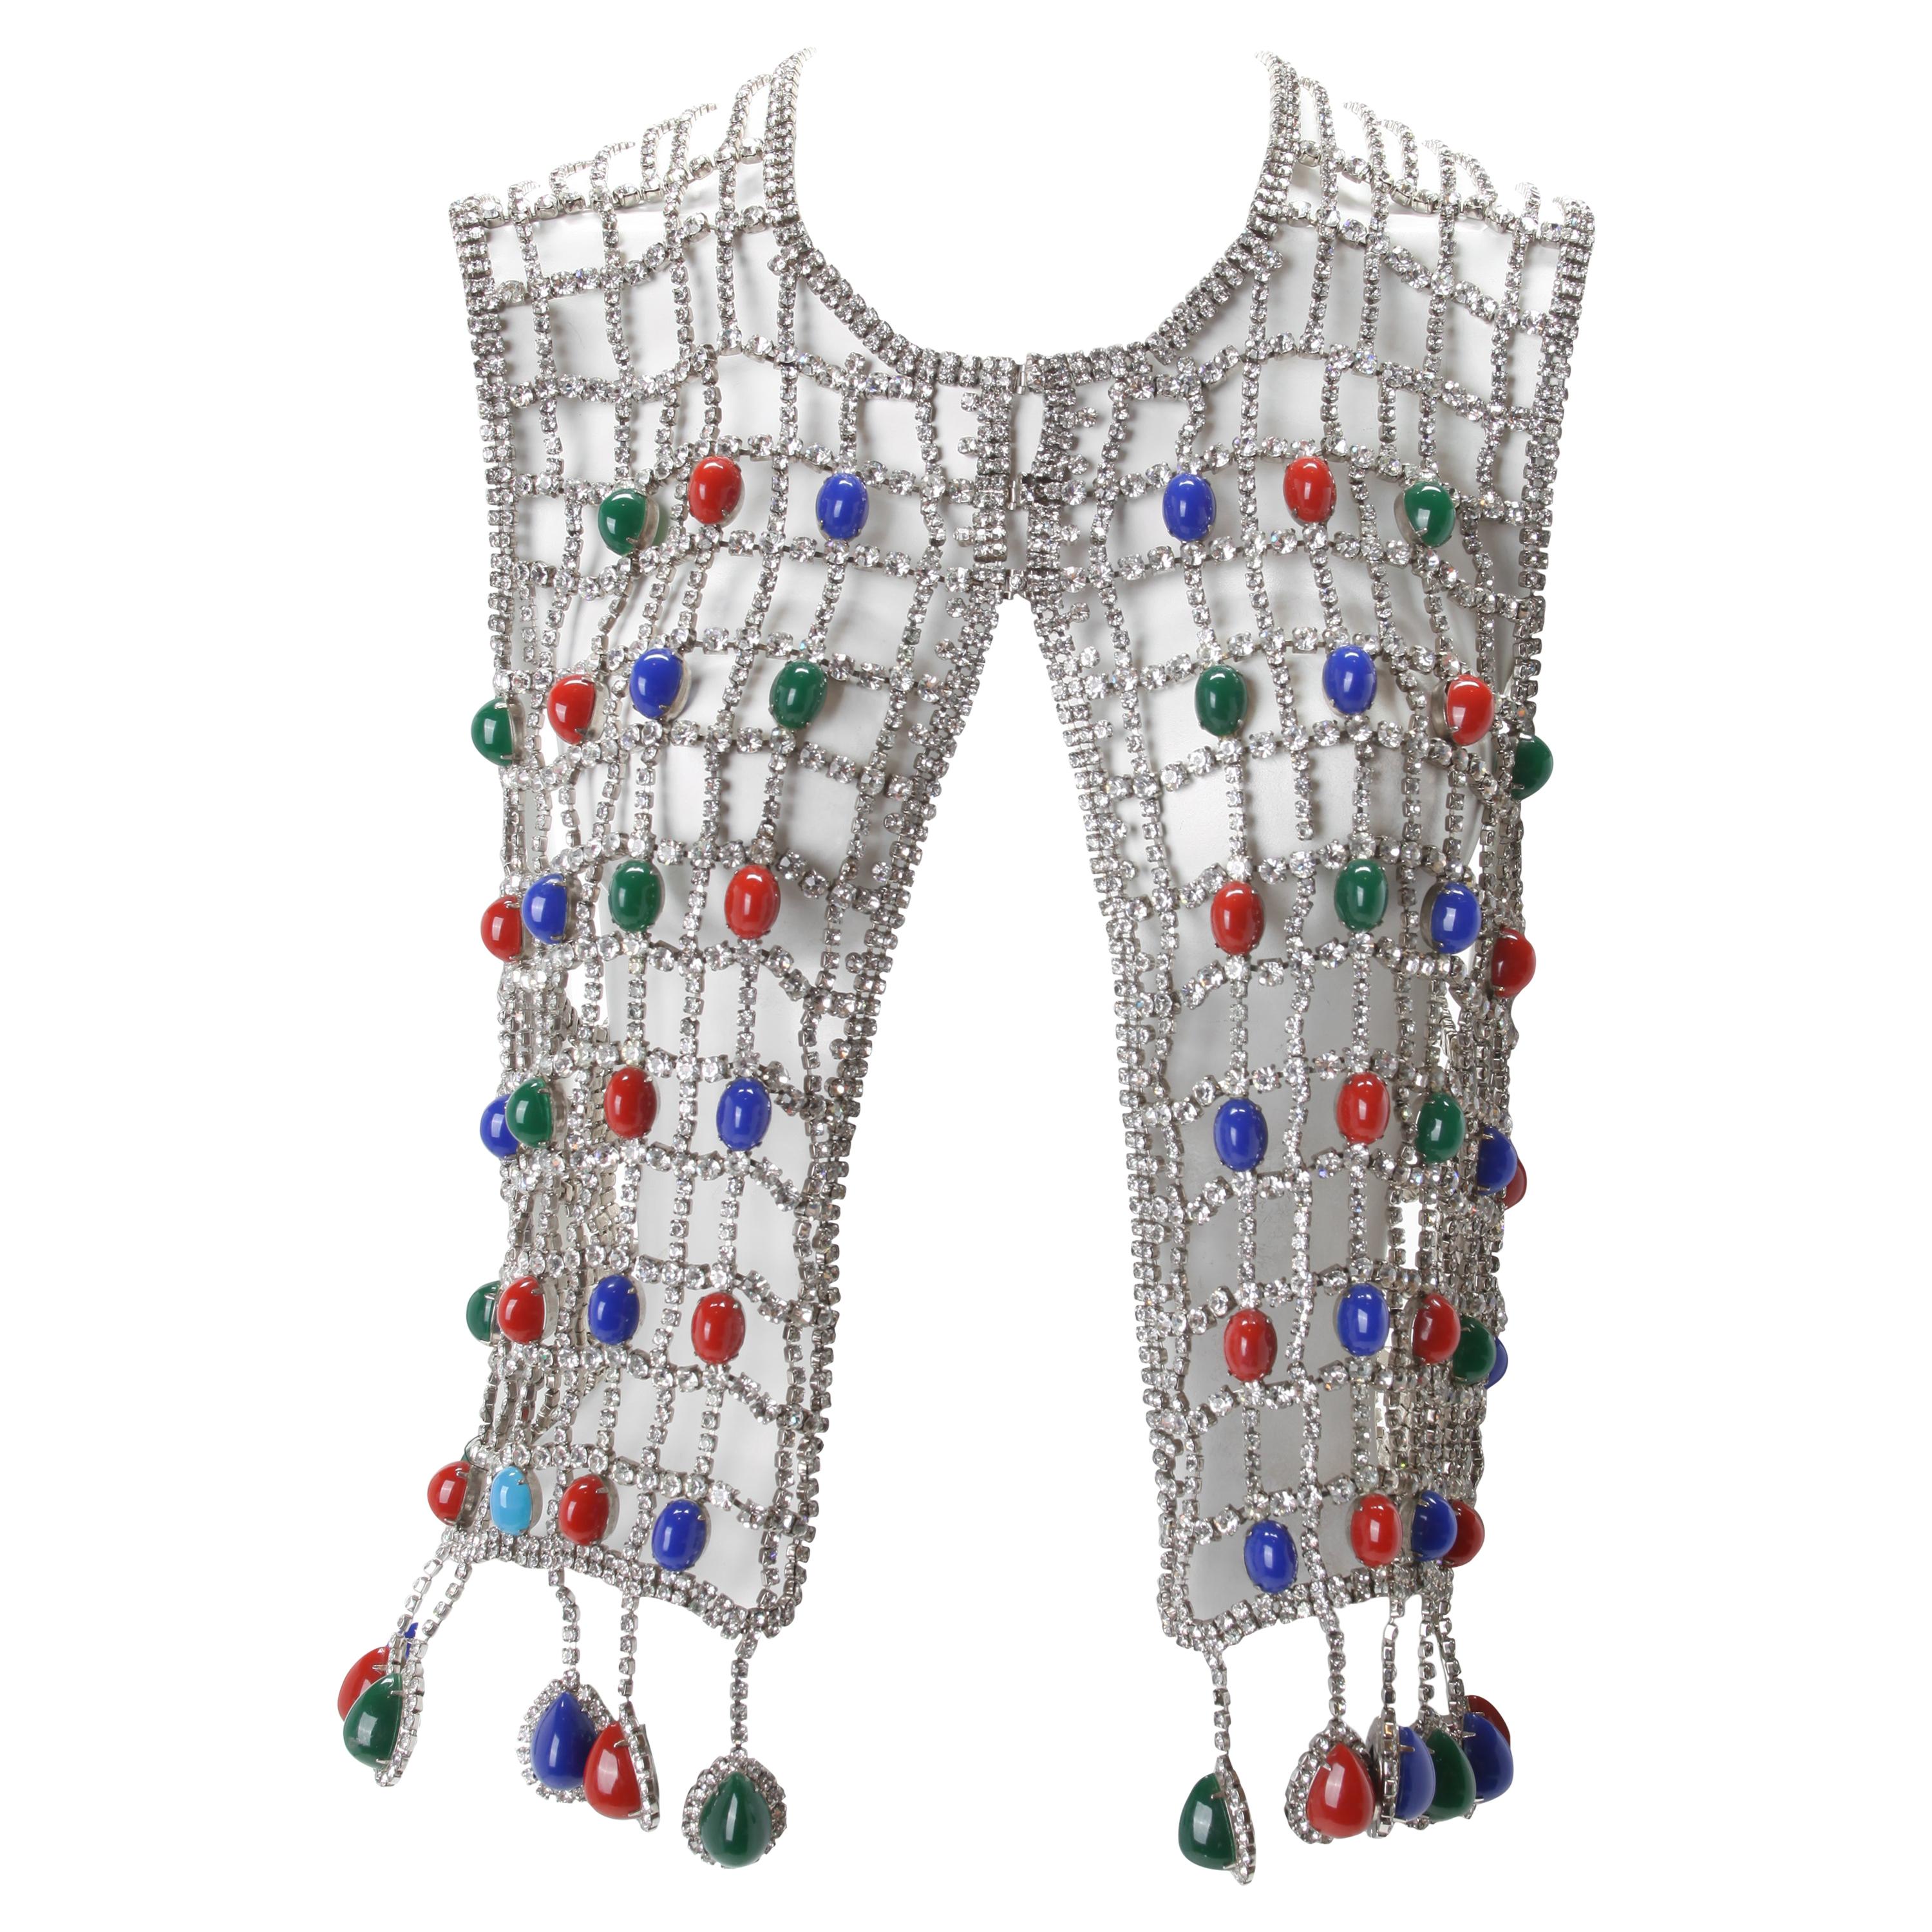 Rhinestone Vest with Multi Colored Beads, c.1970s